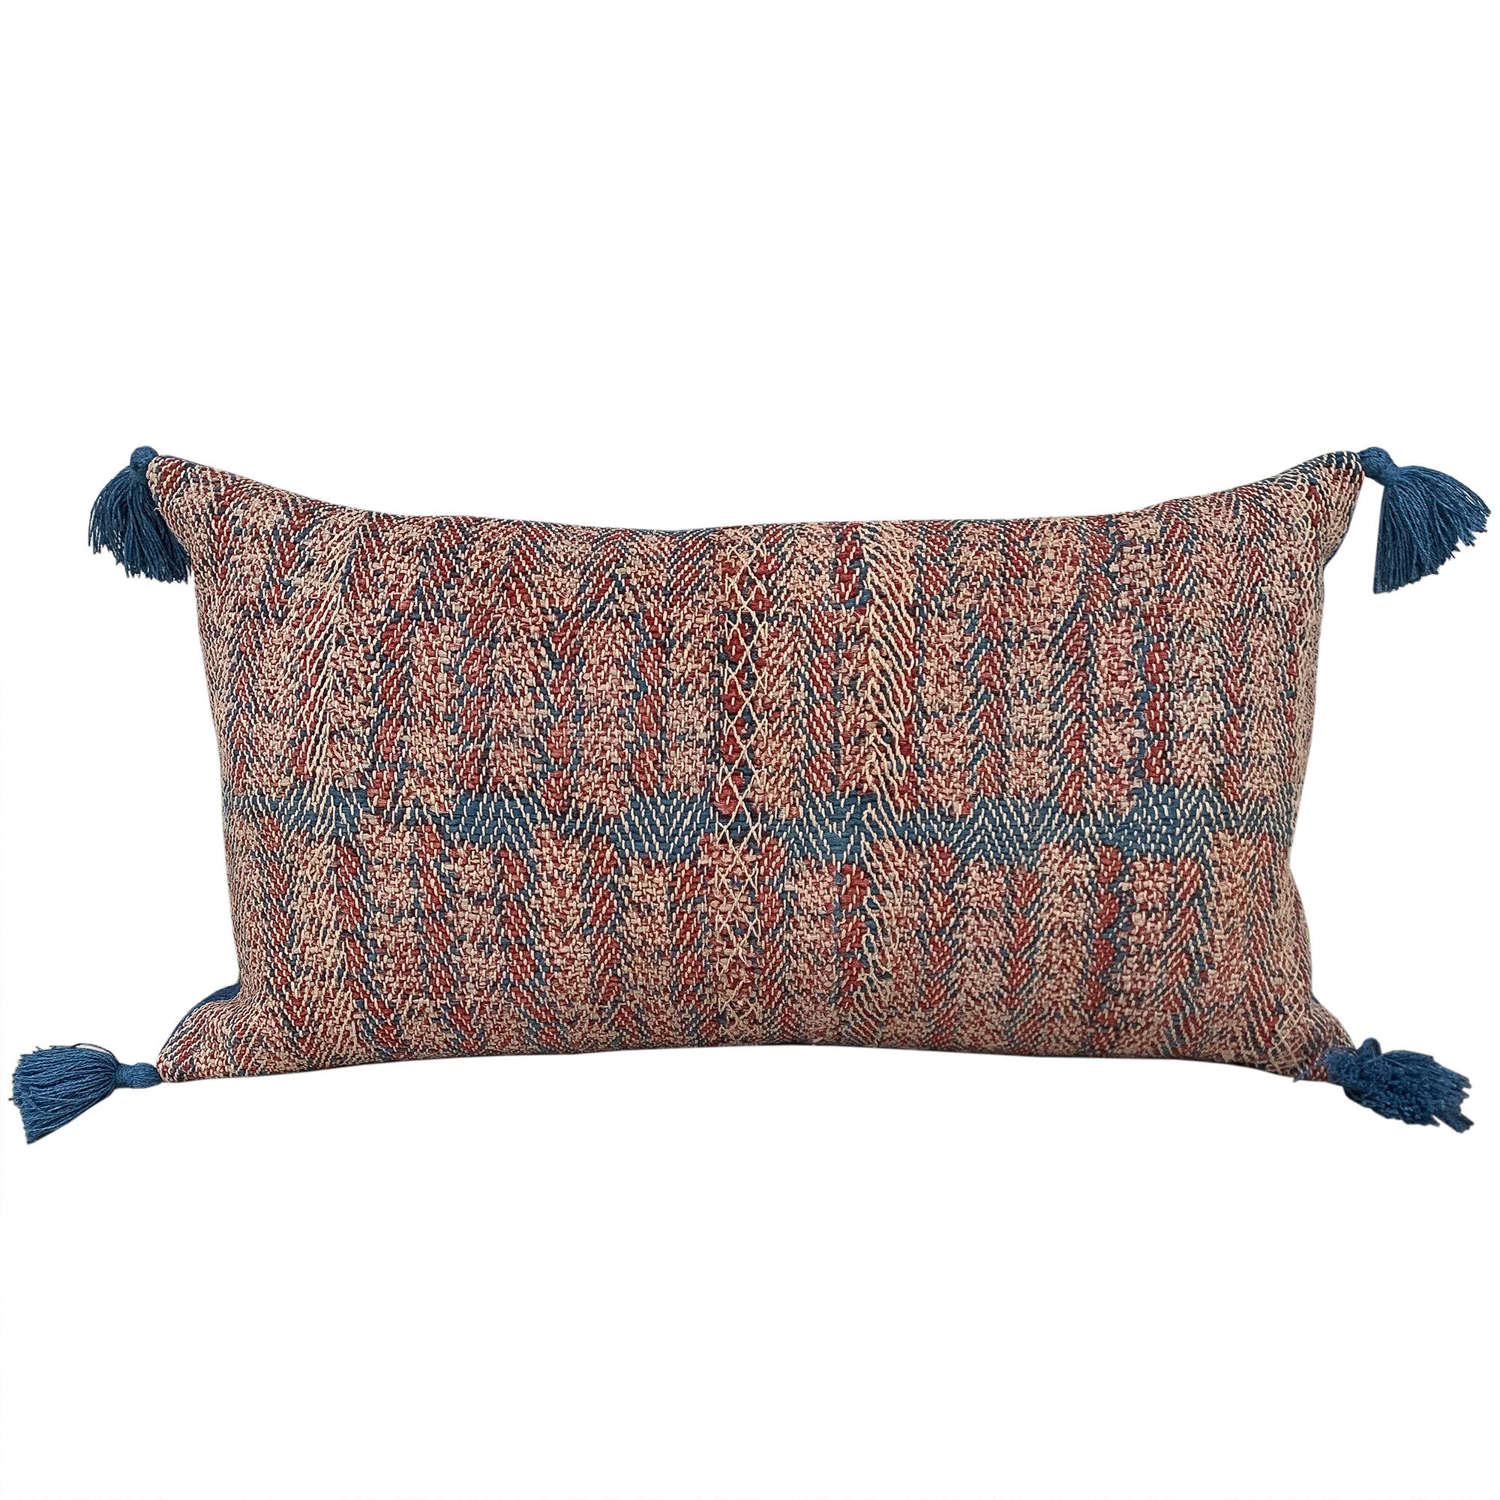 Banjara cushion with tassels